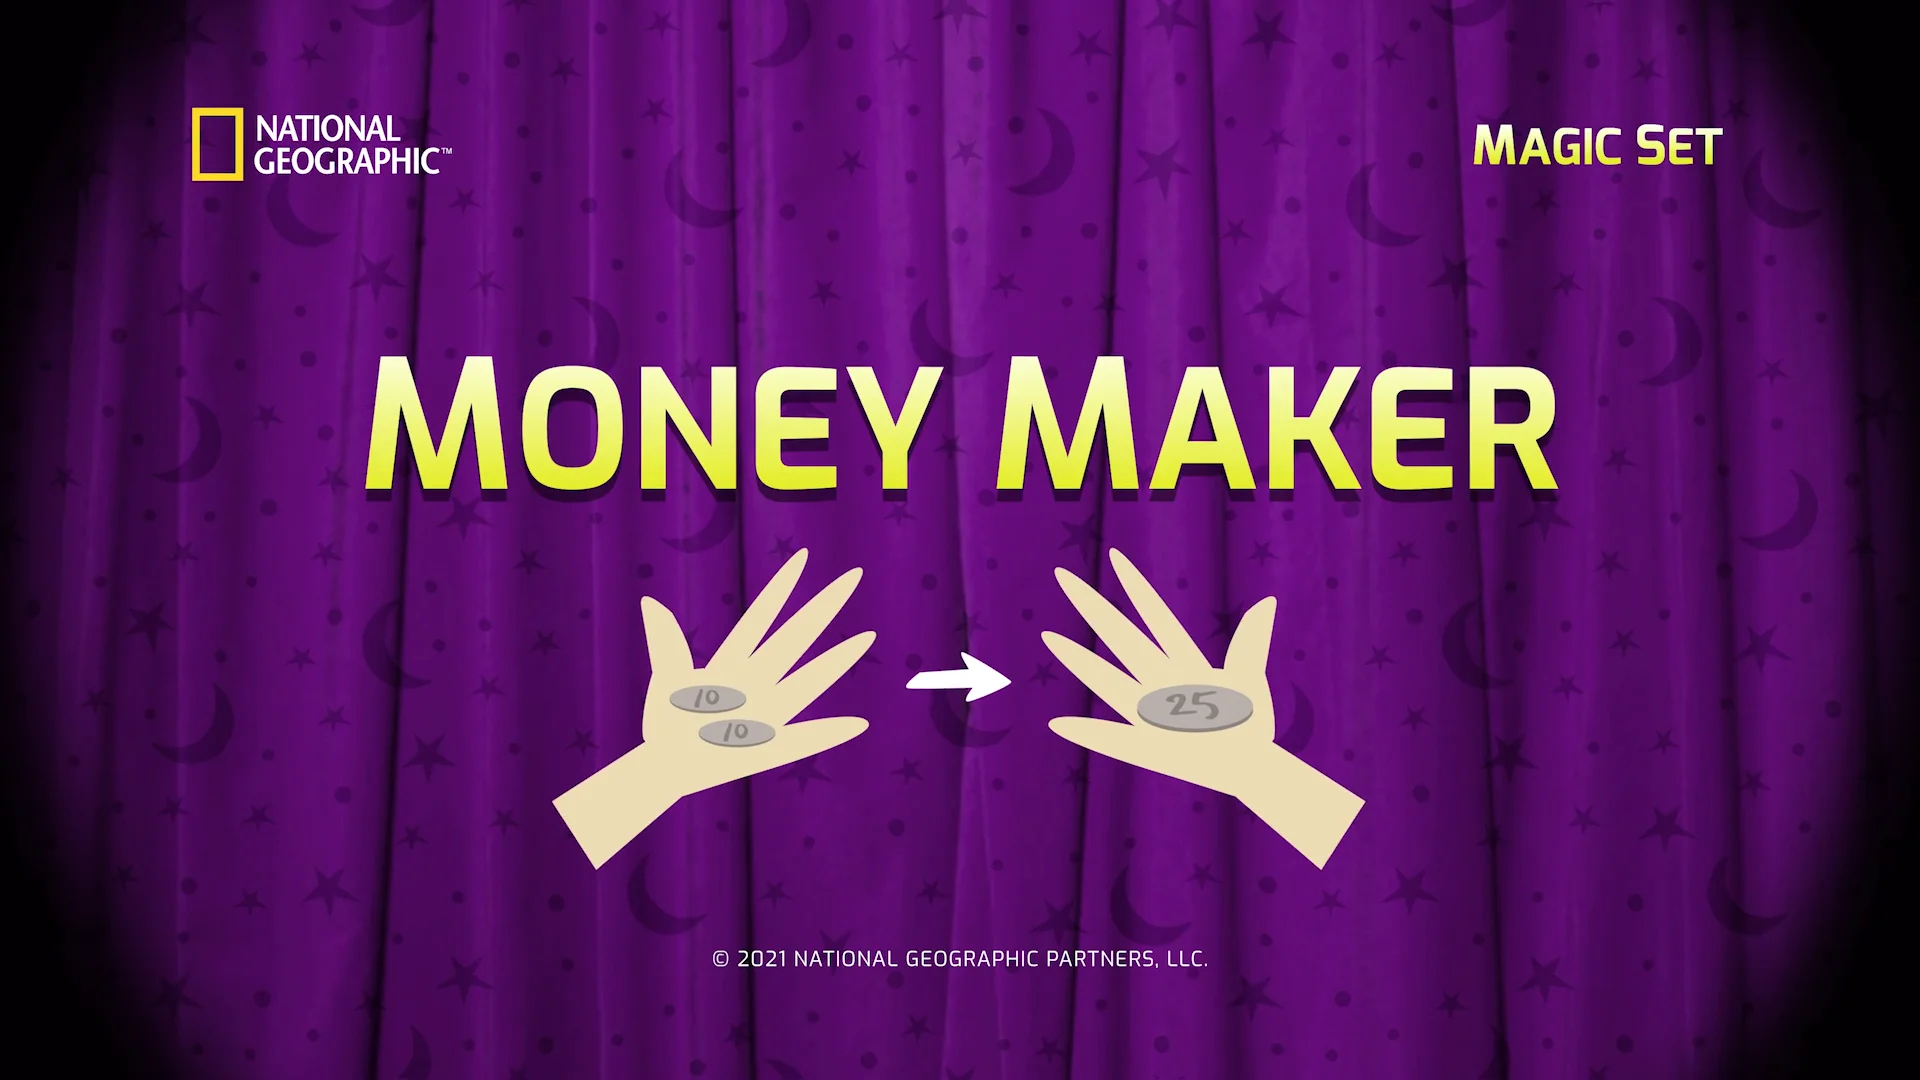 National Geographic - Magic Set - Money Maker on Vimeo